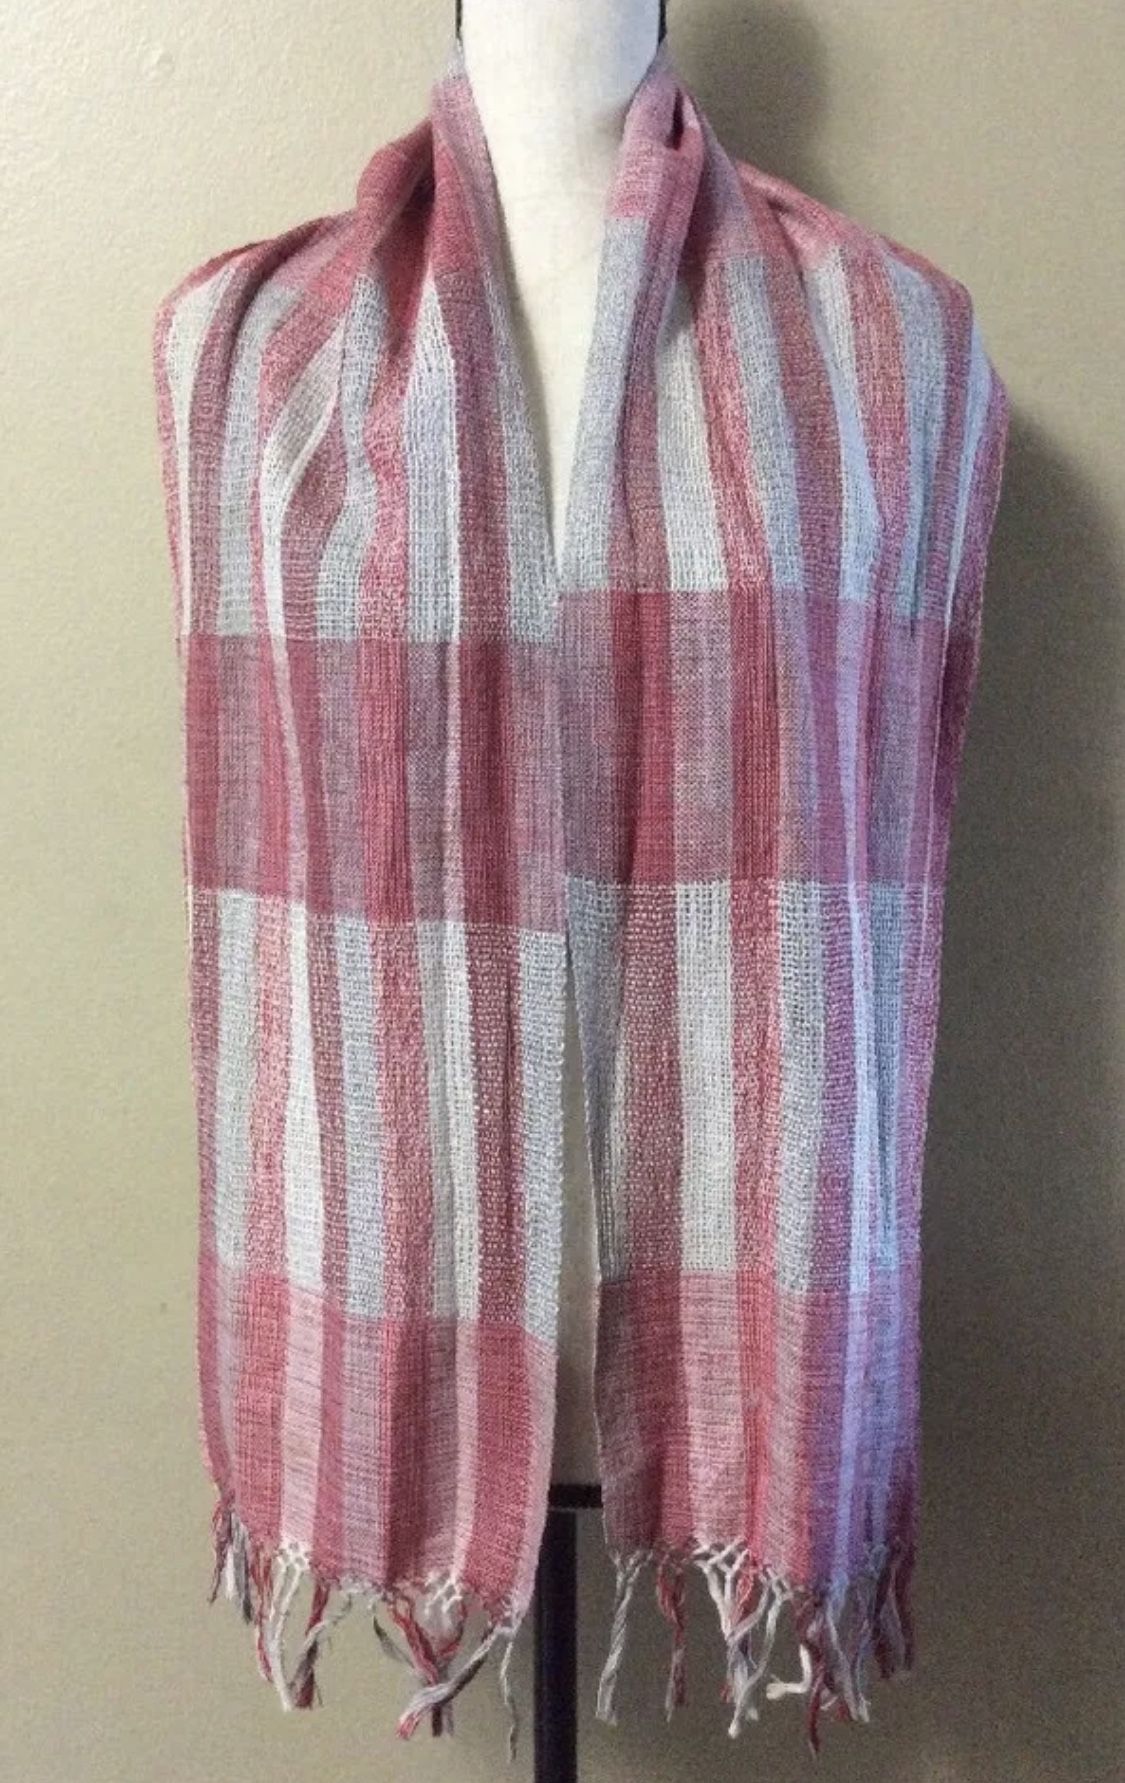 60" Long Red Gray Striped Plaid Thin Knit Scarf Wrap Shawl Fringe